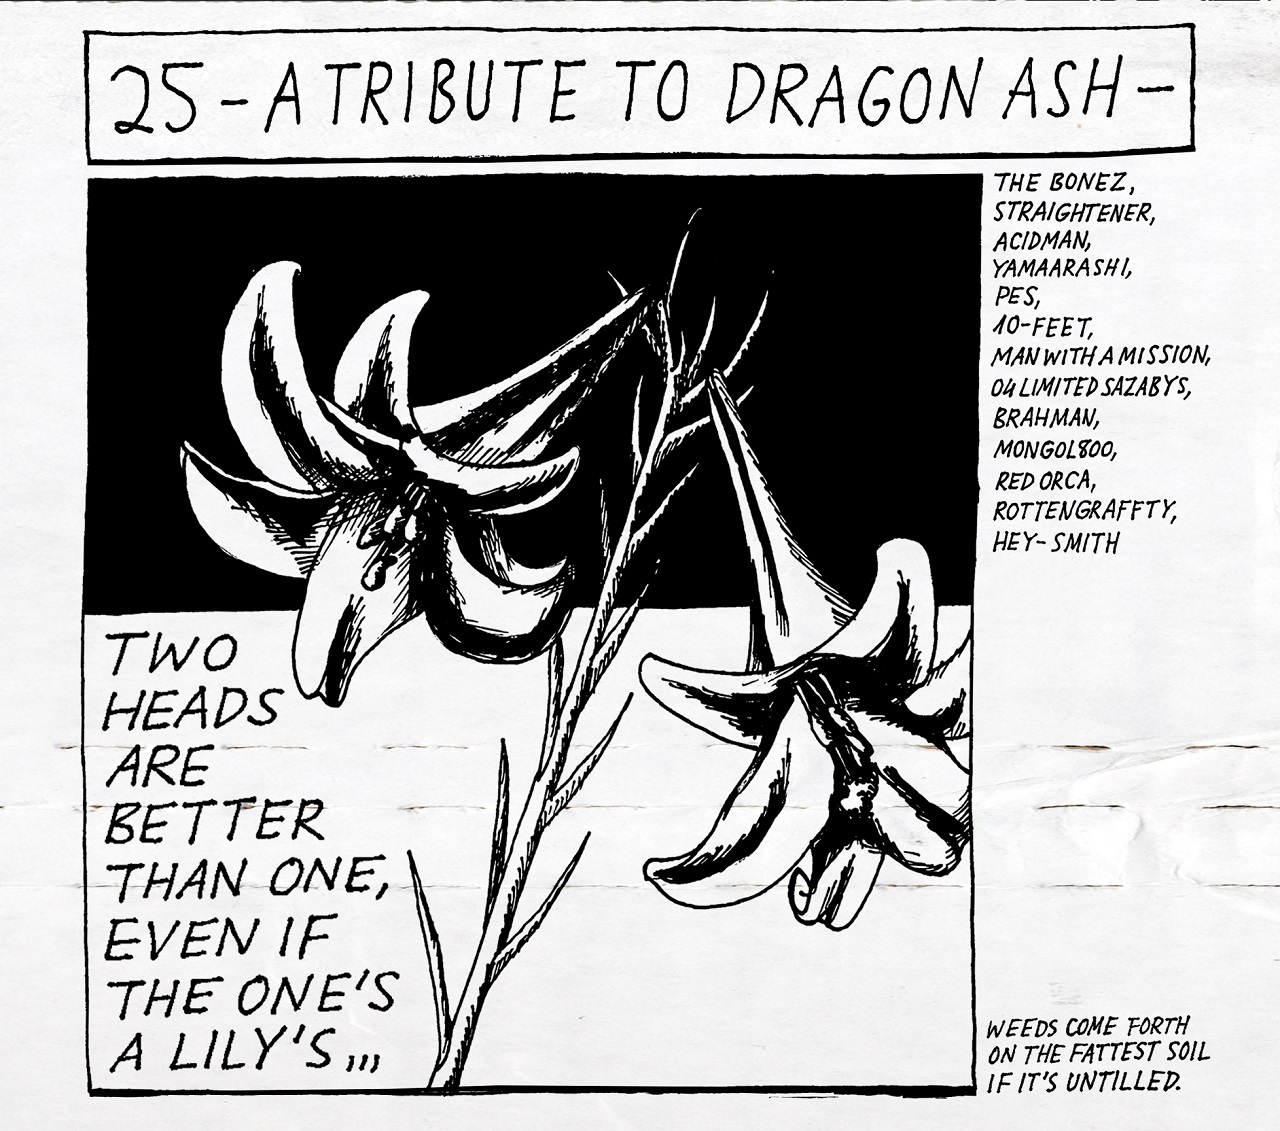 『25 - A Tribute To Dragon Ash -』ジャケット